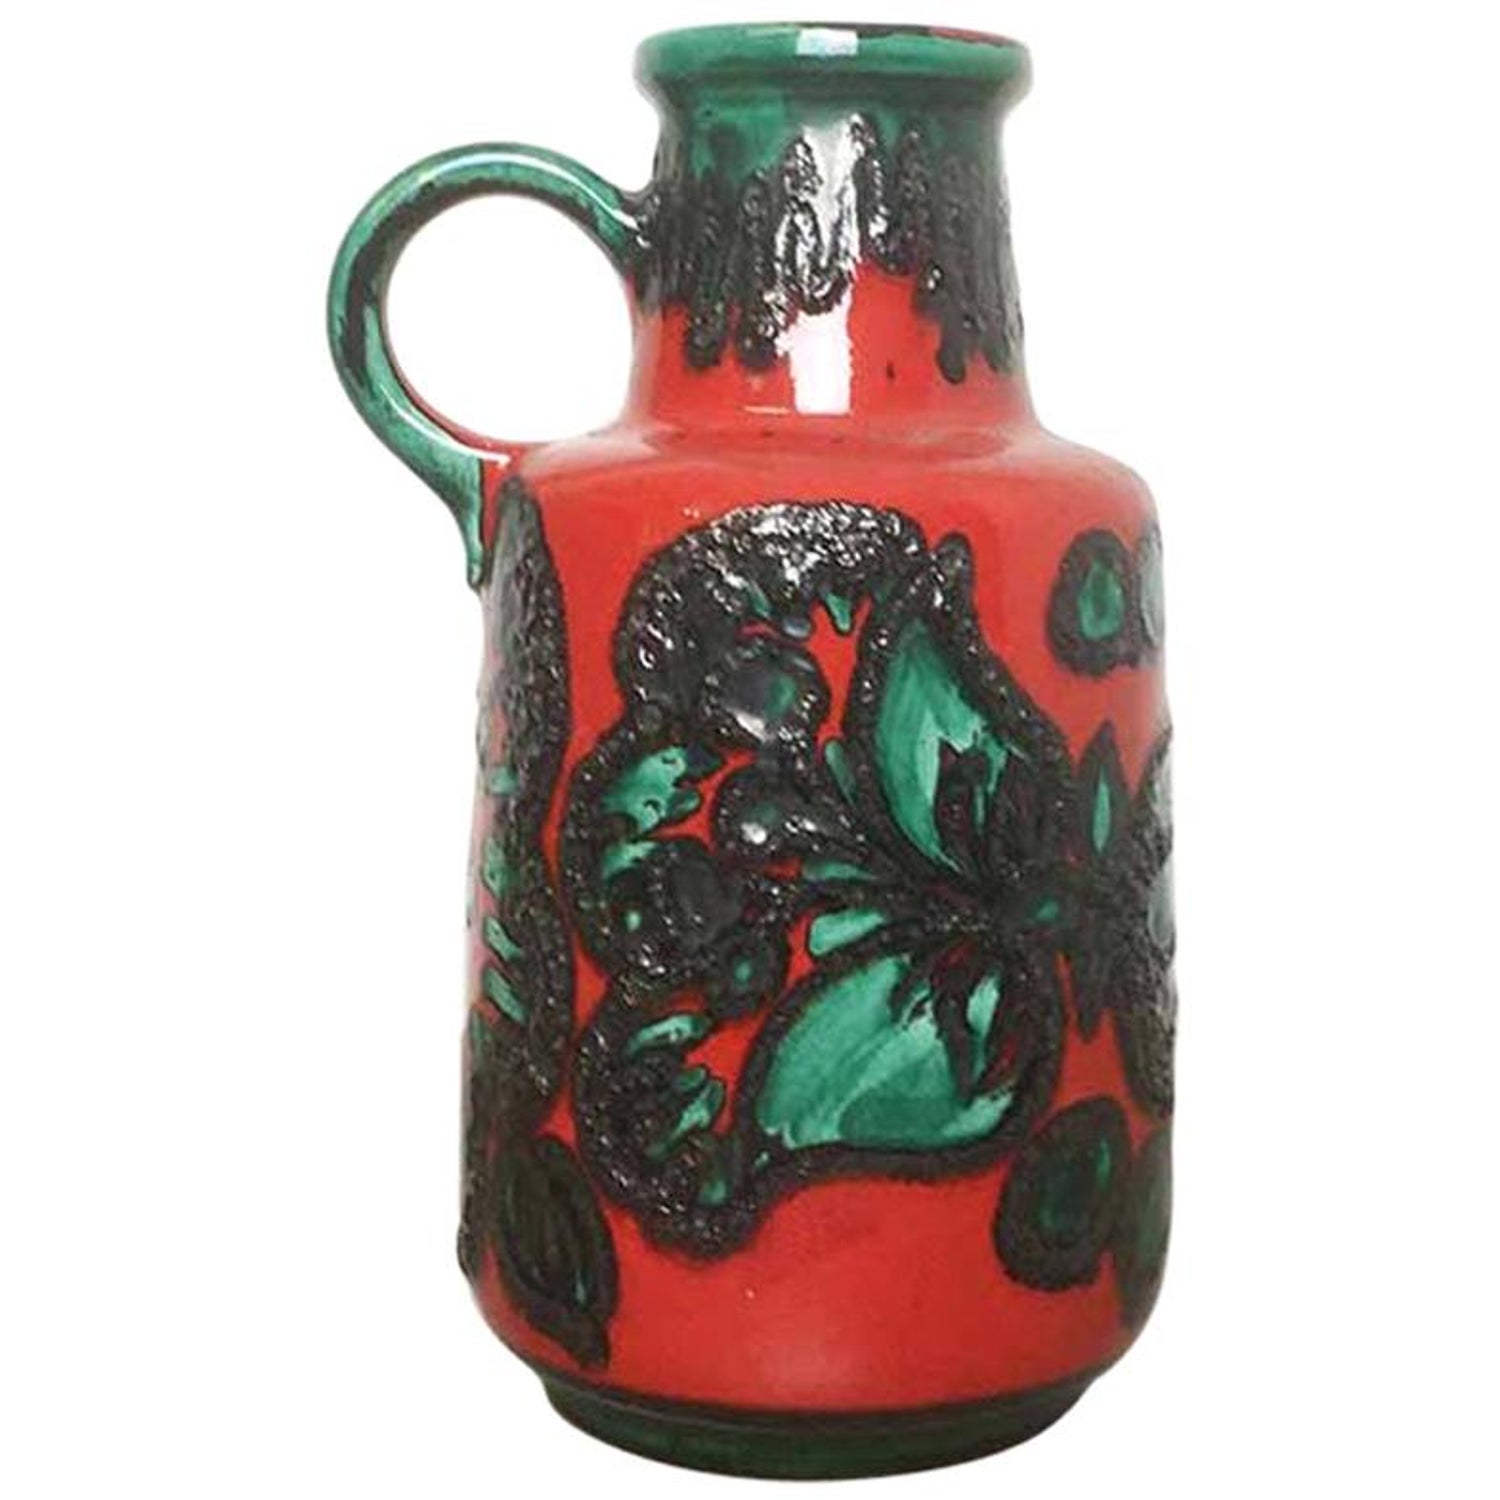 Extra Large 1960s Ceramic West German Studio Pottery Vase Germany Bauhaus For Sale At 1stdibs